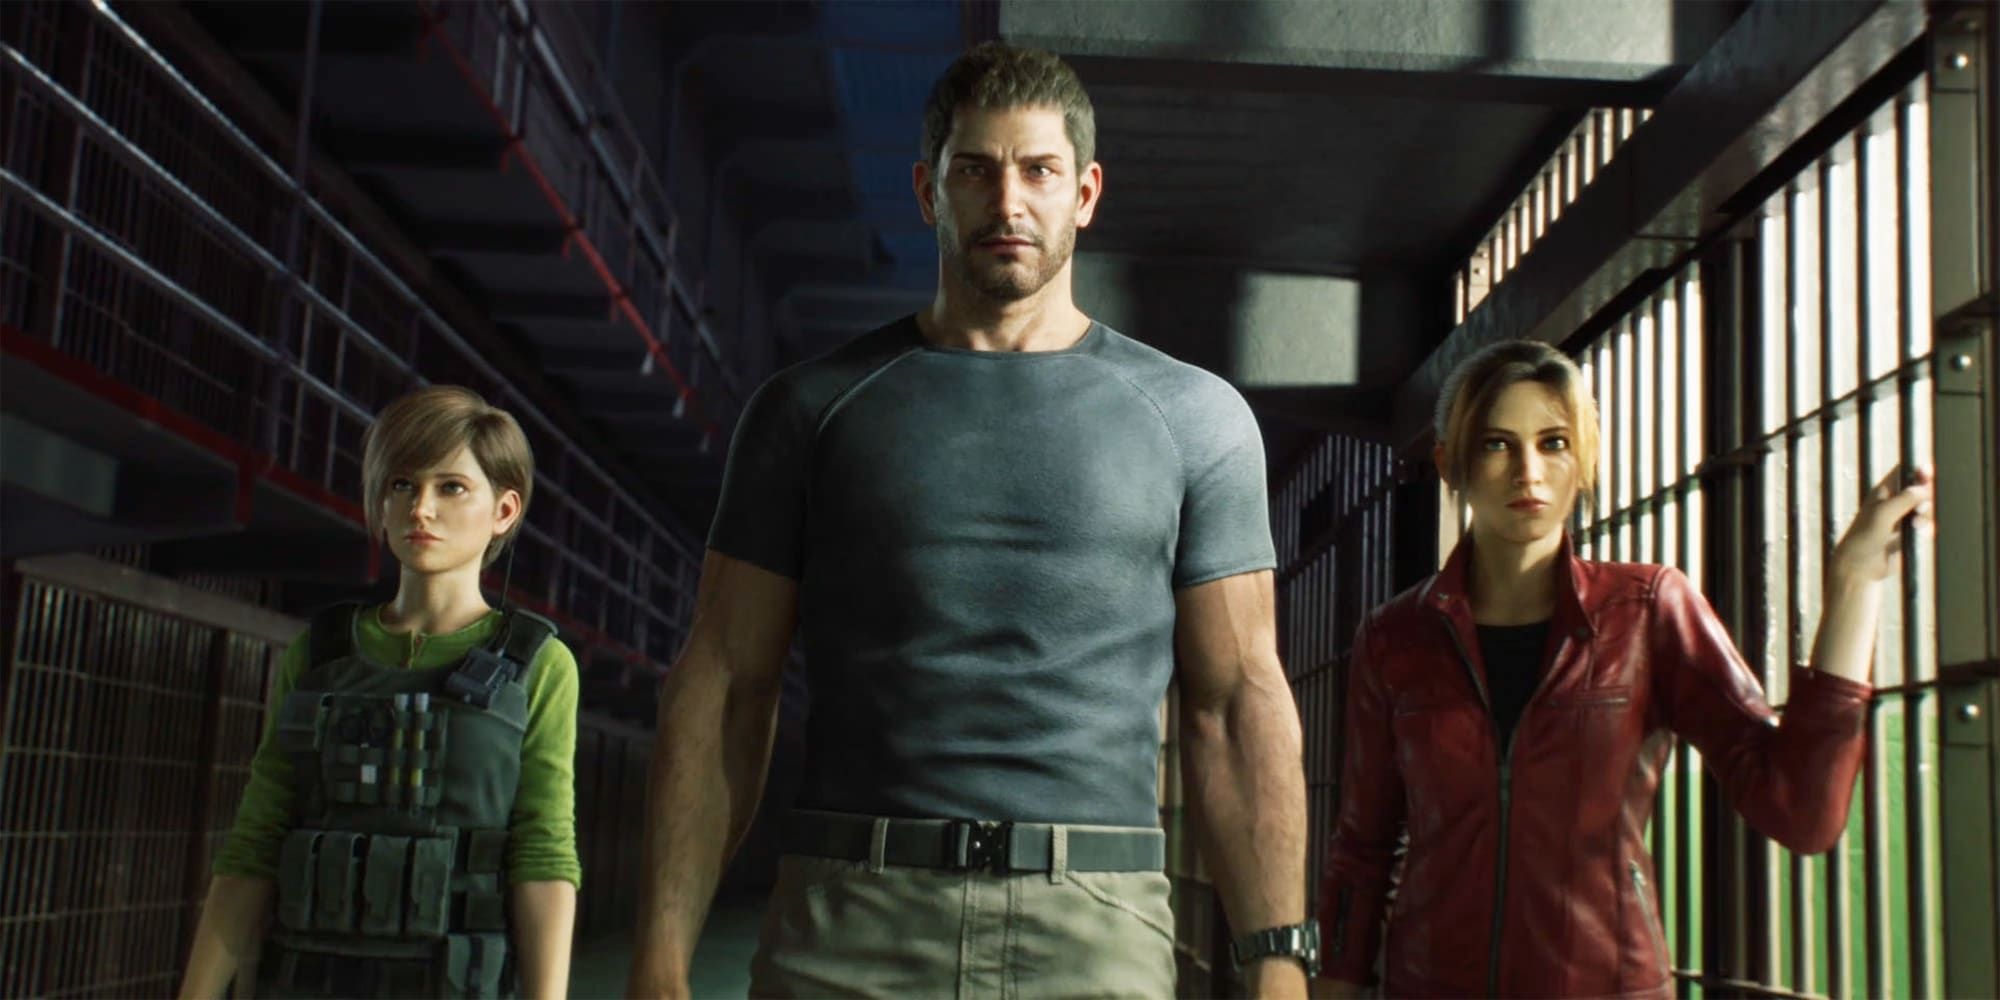 Resident Evil: Death Island' Releasing on Blu-Ray and Digital July 25 - IMDb